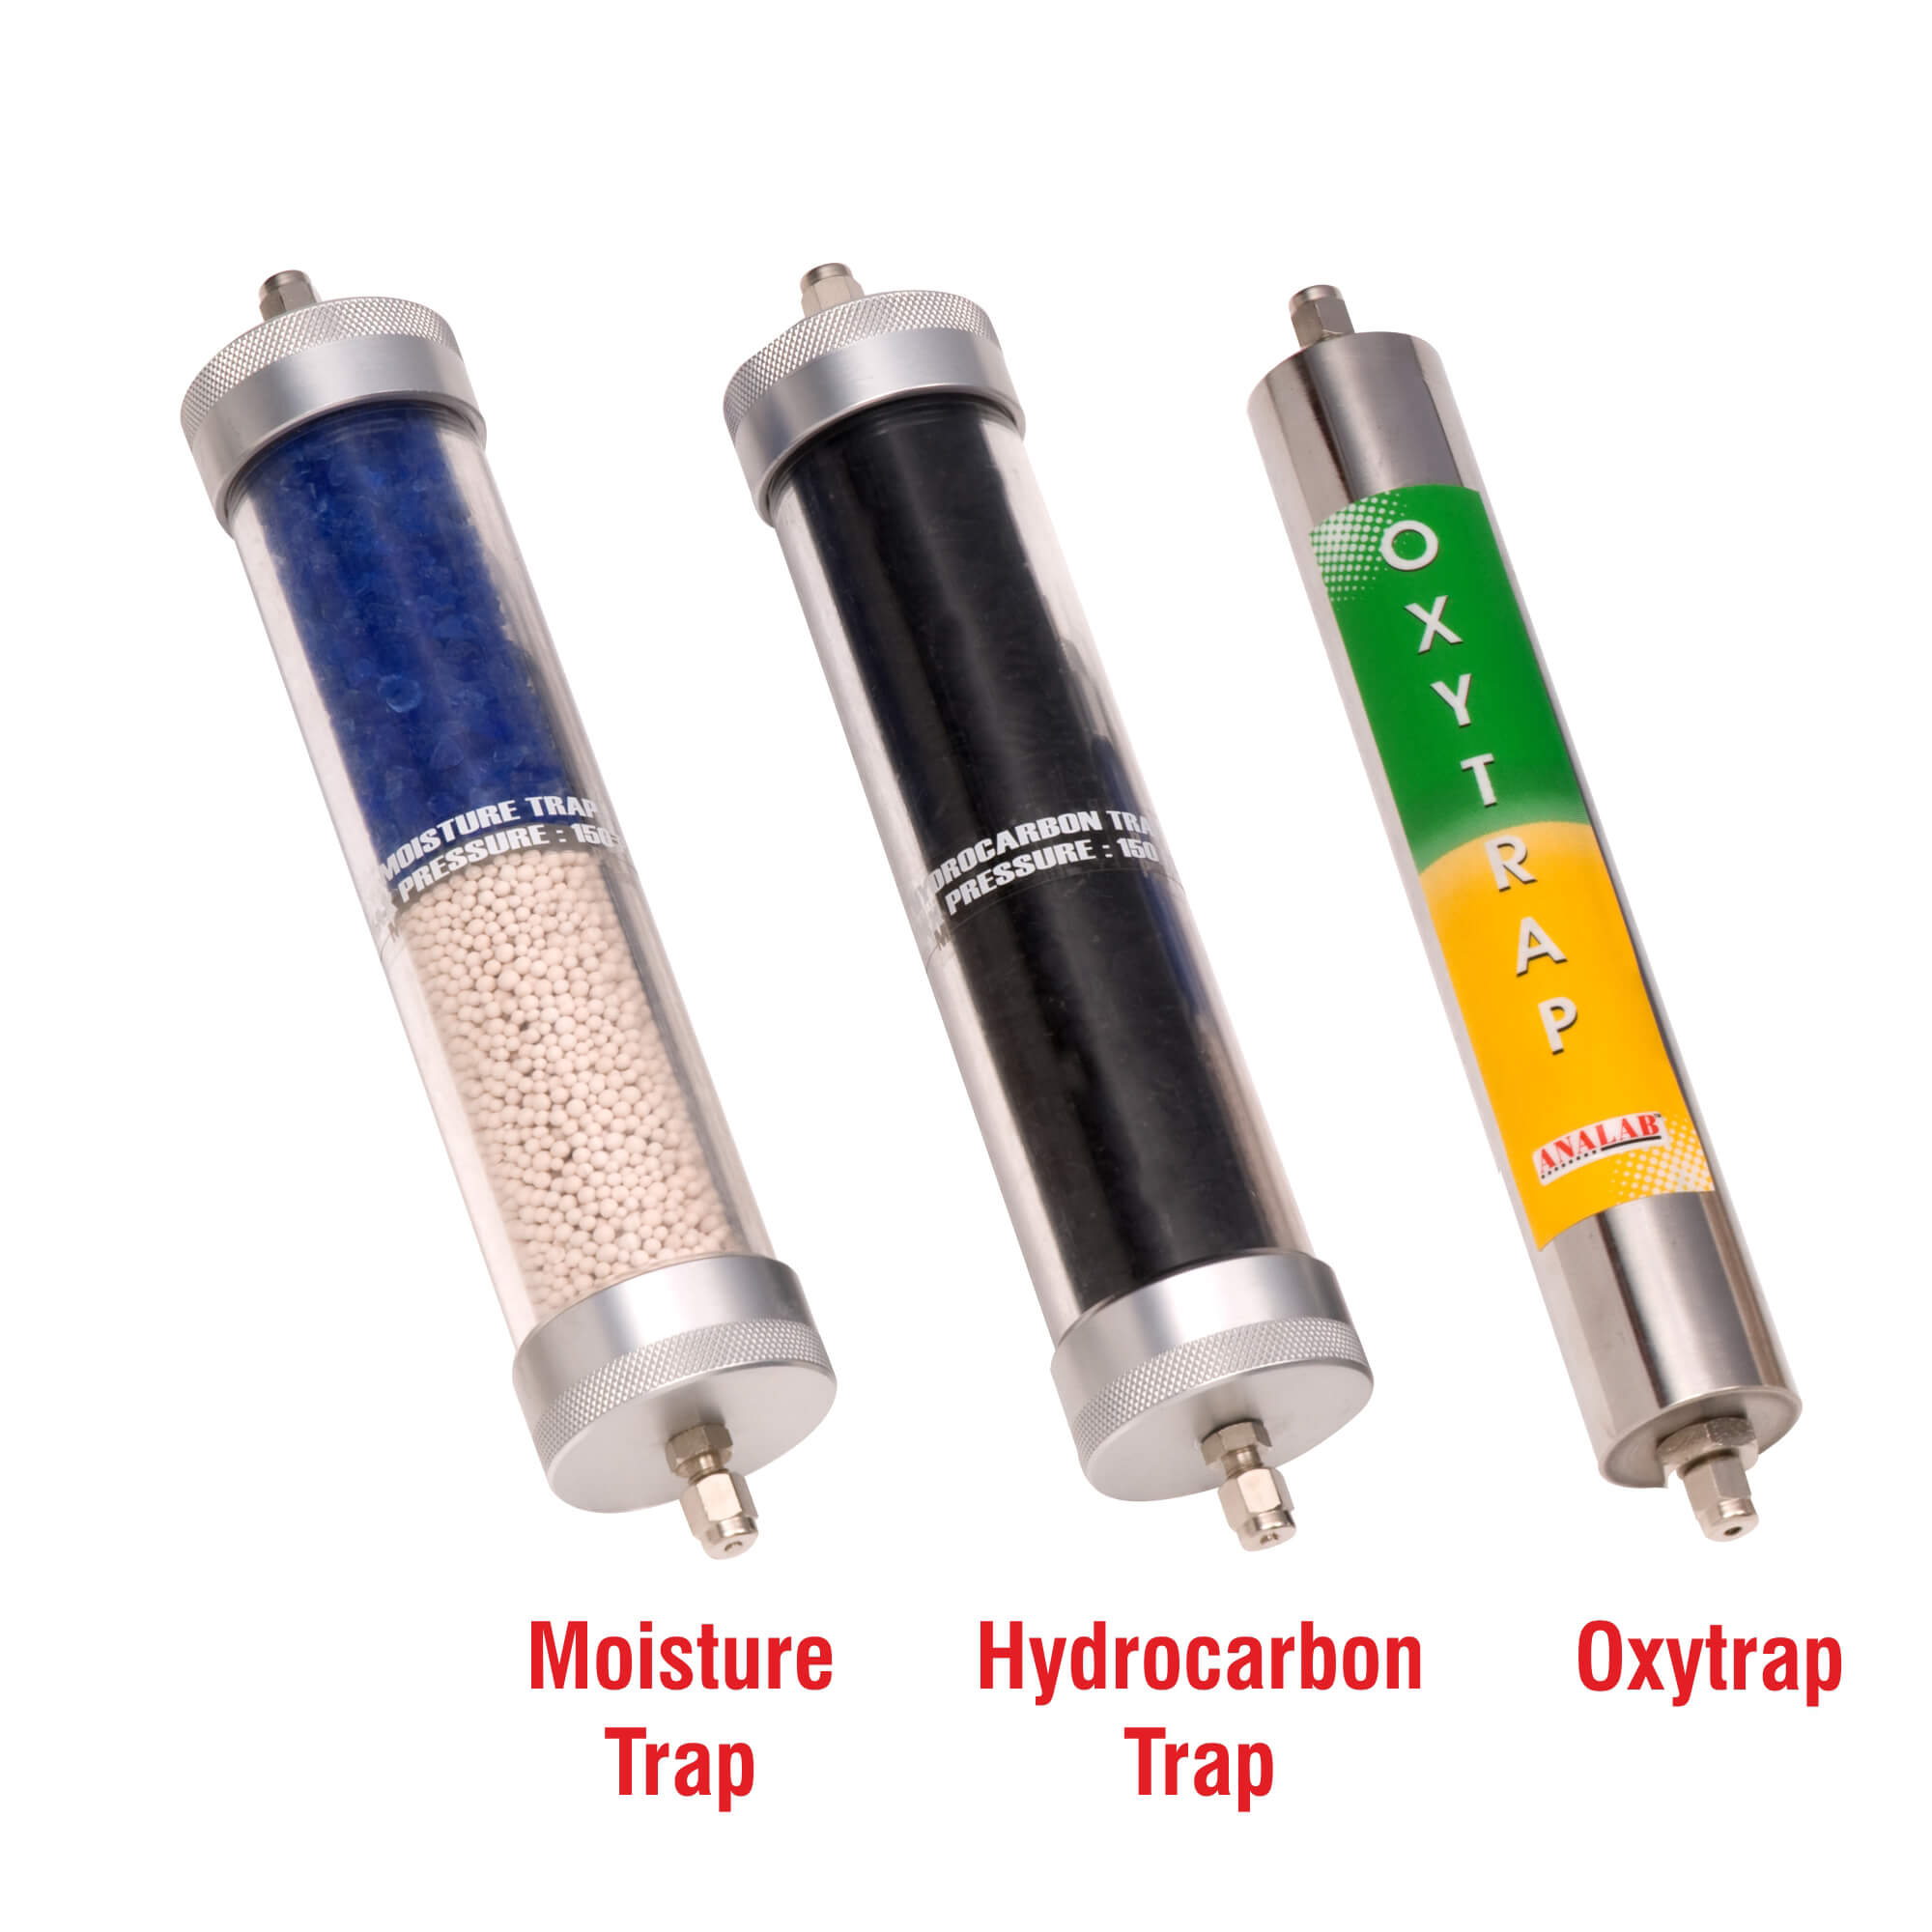 Moisture Trap / Hydrocarbon Trap / Oxytrap